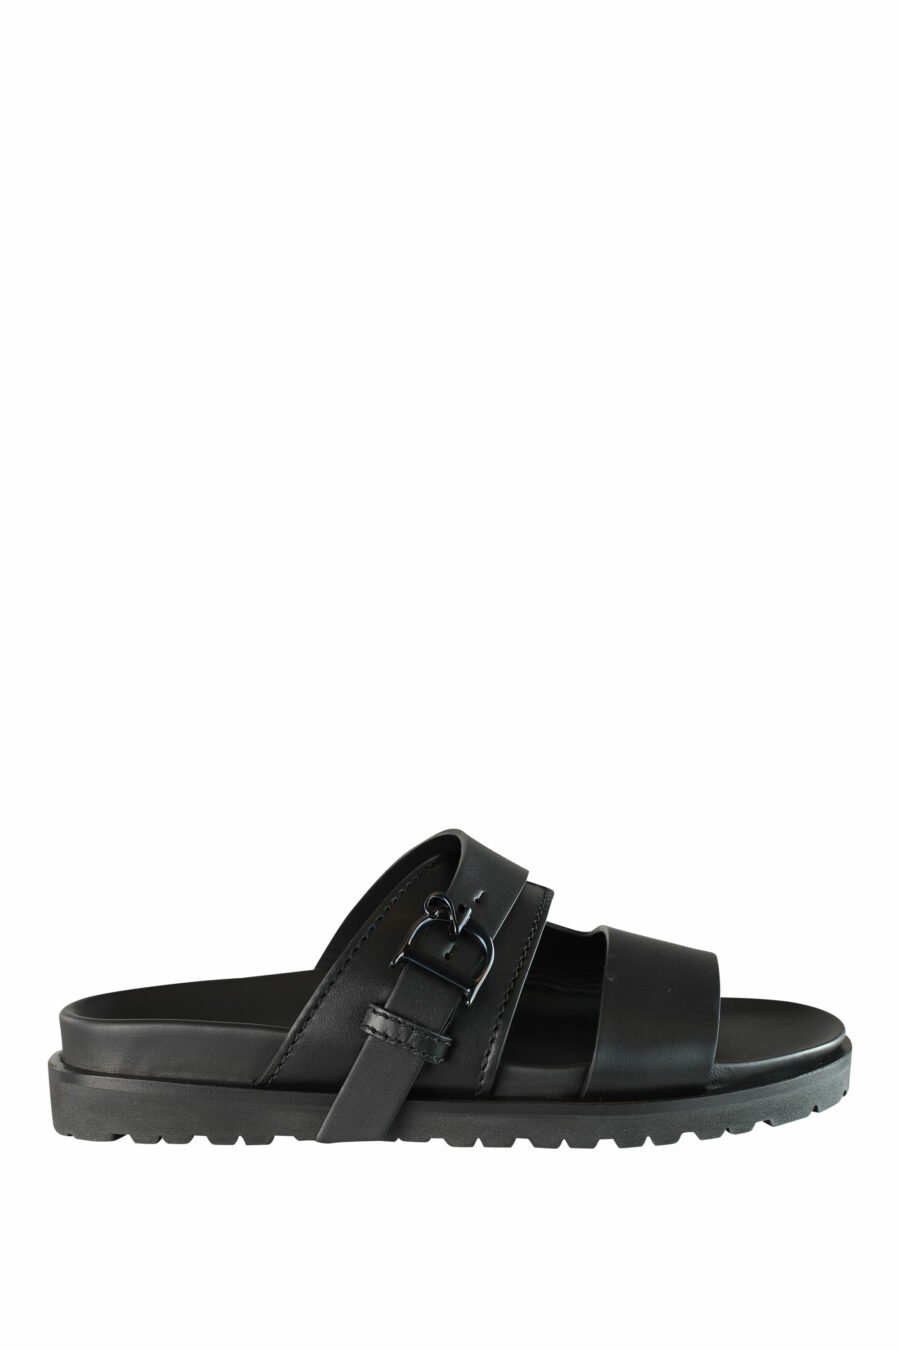 Black sandals with monochrome metal "D2" logo - IMG 1308